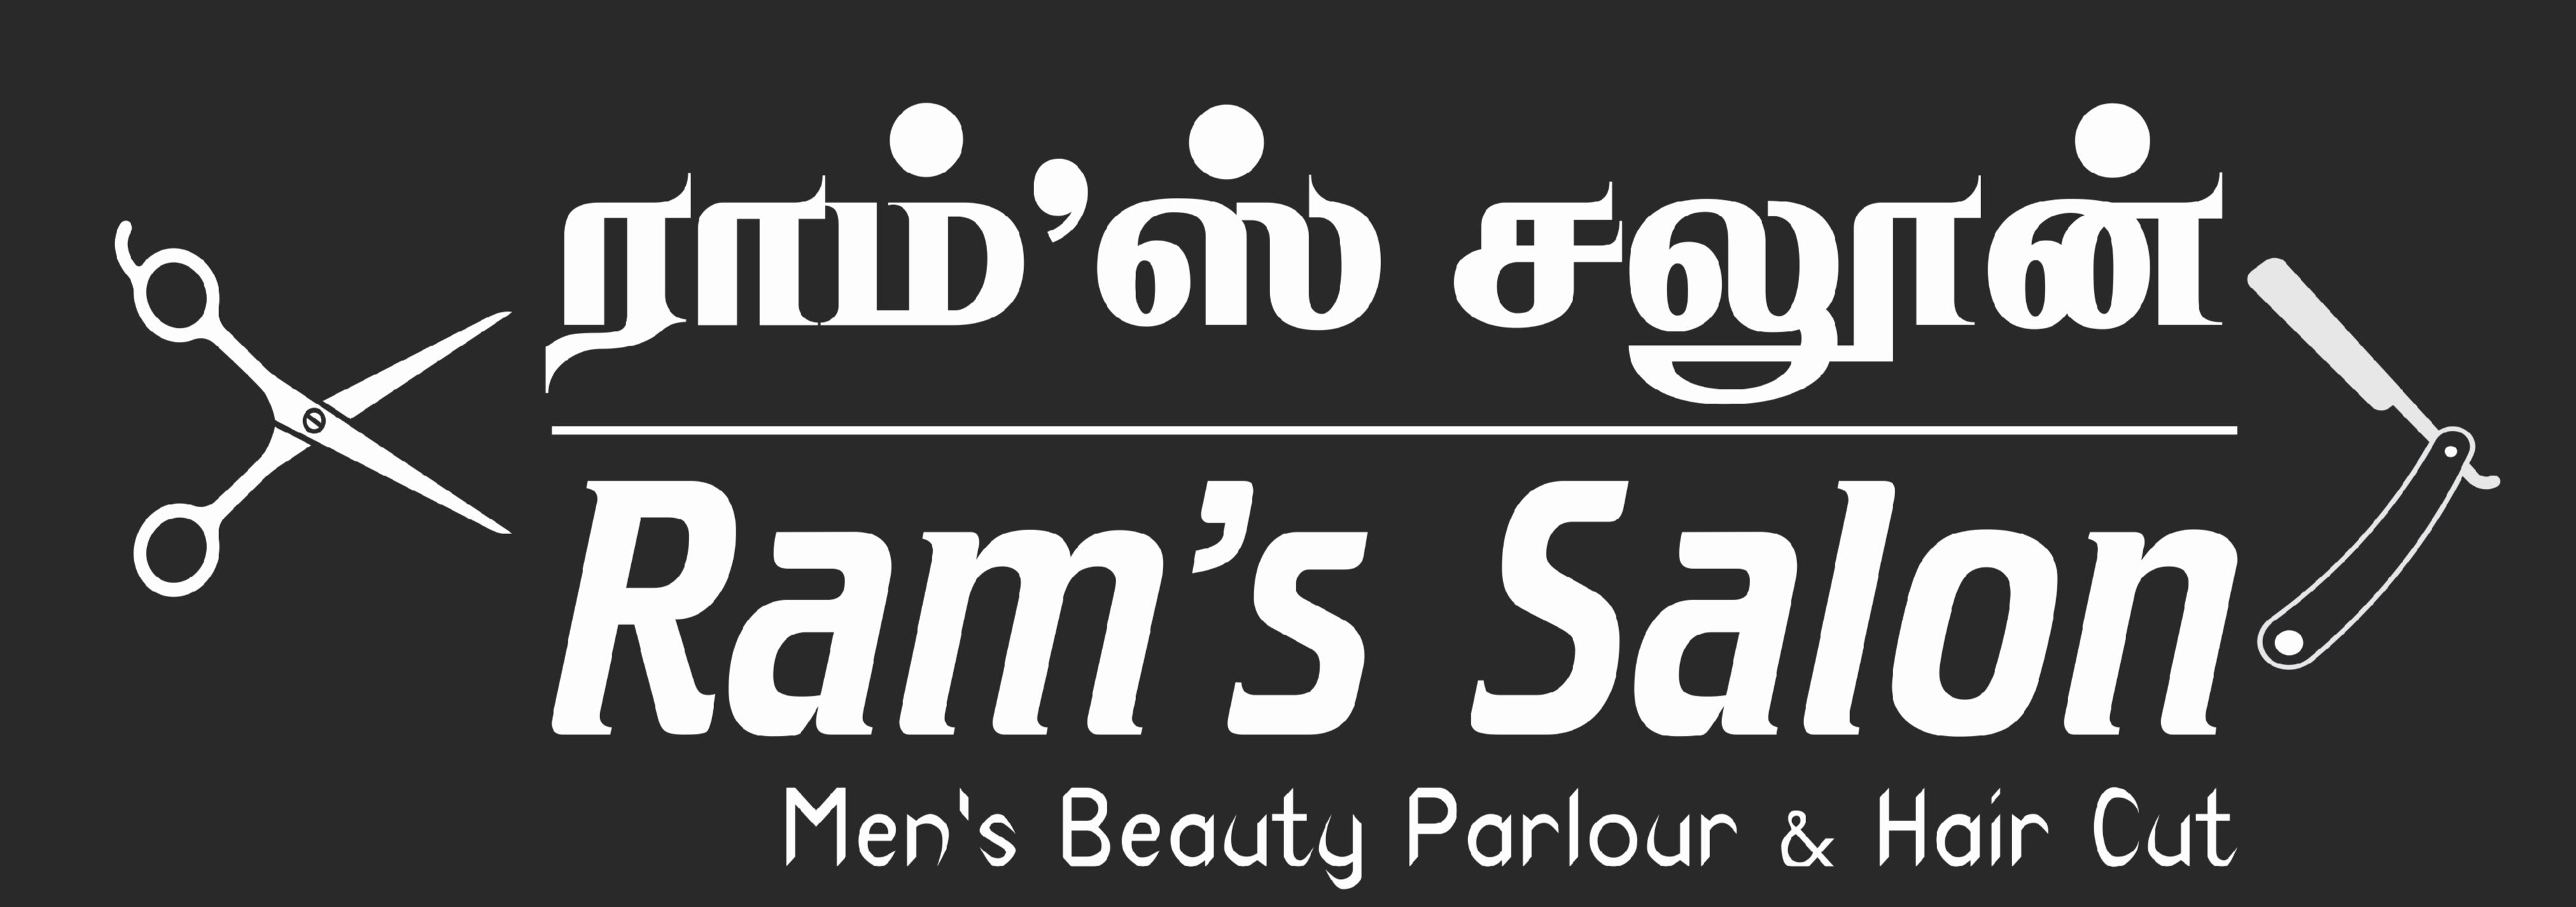 Ram's Salon